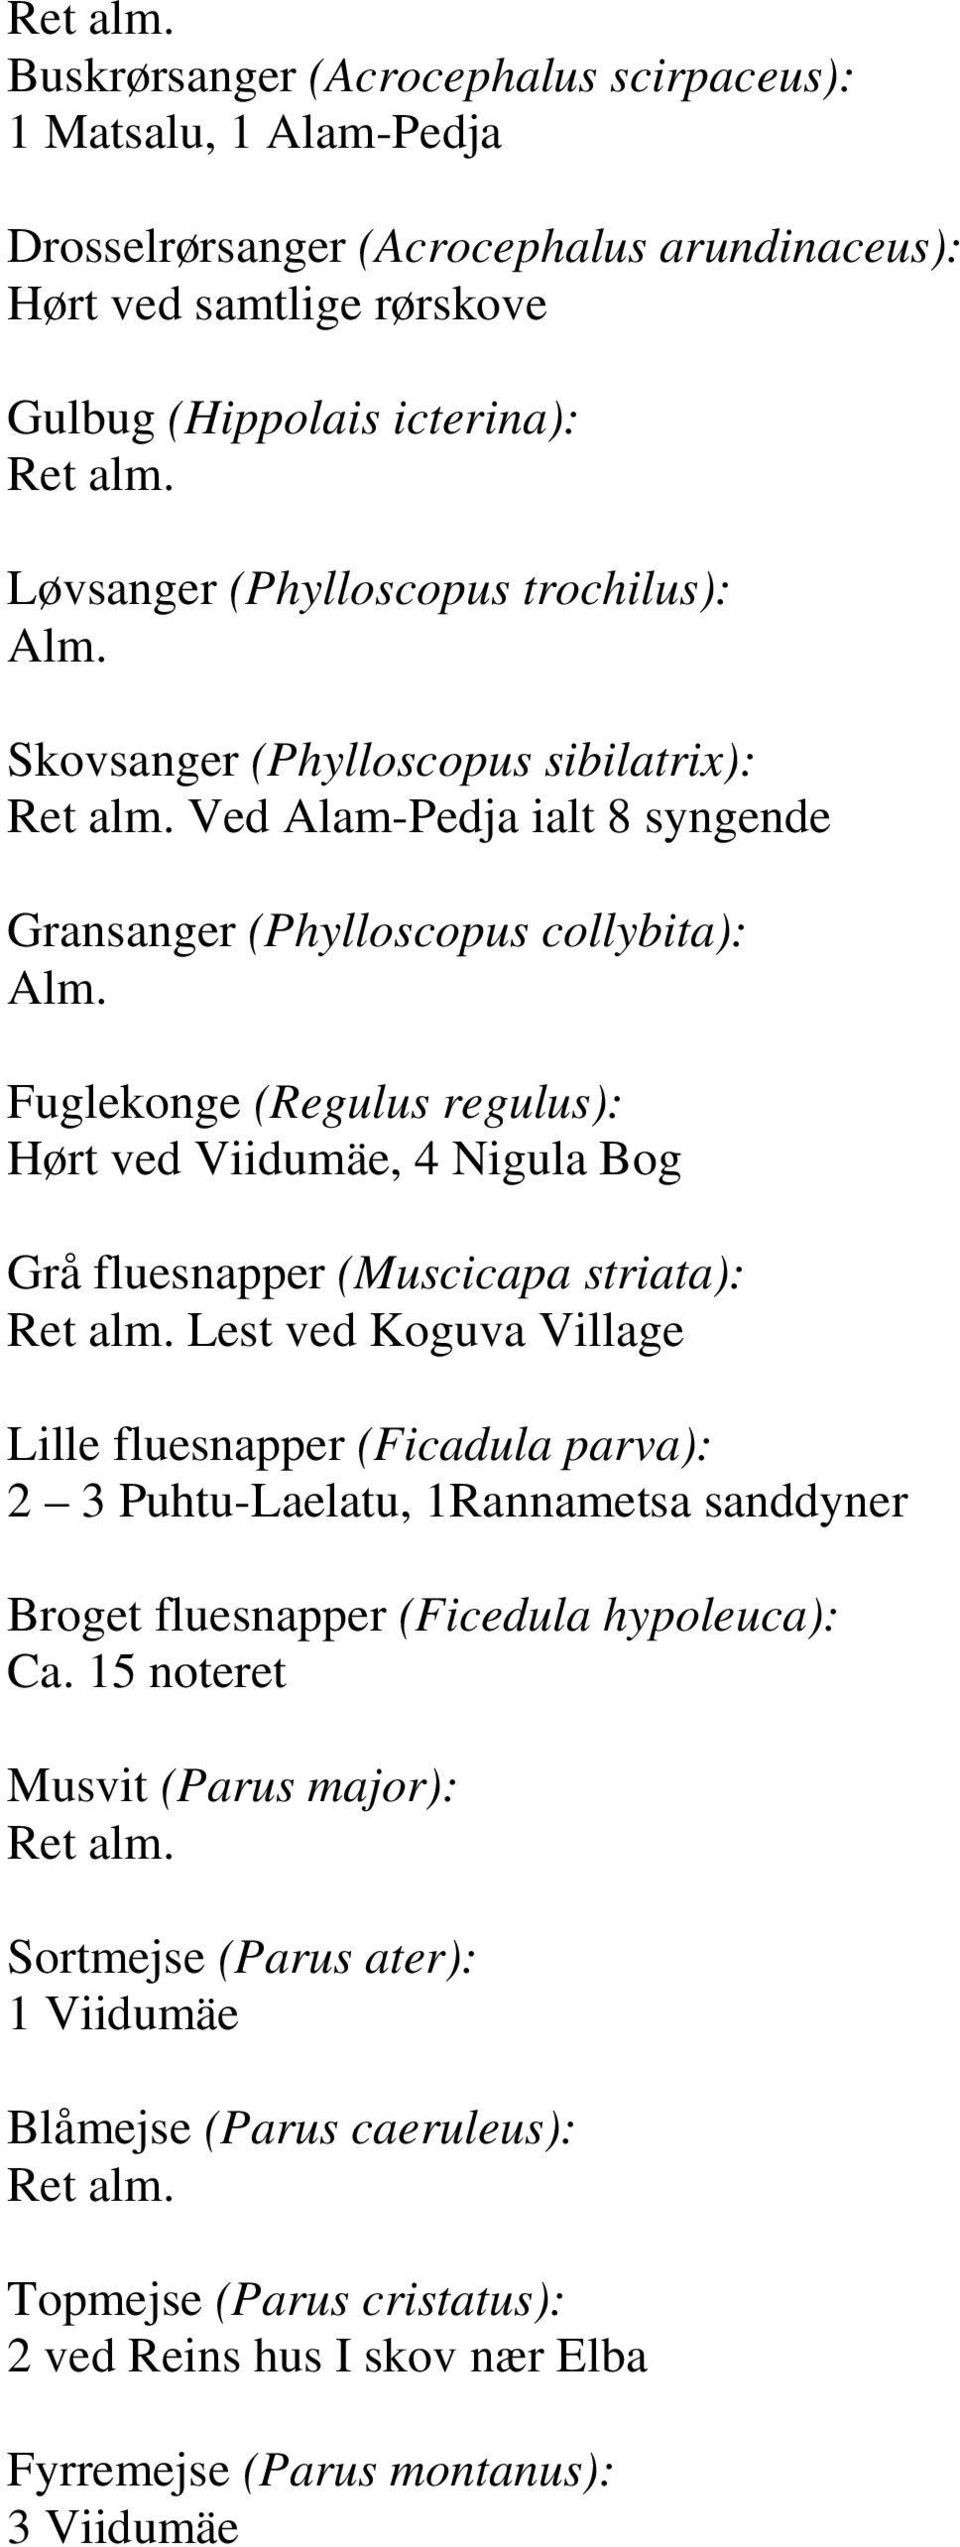 Ved Alam-Pedja ialt 8 syngende Gransanger (Phylloscopus collybita): Fuglekonge (Regulus regulus): Hørt ved Viidumäe, 4 Nigula Bog Grå fluesnapper (Muscicapa striata): Ret alm.